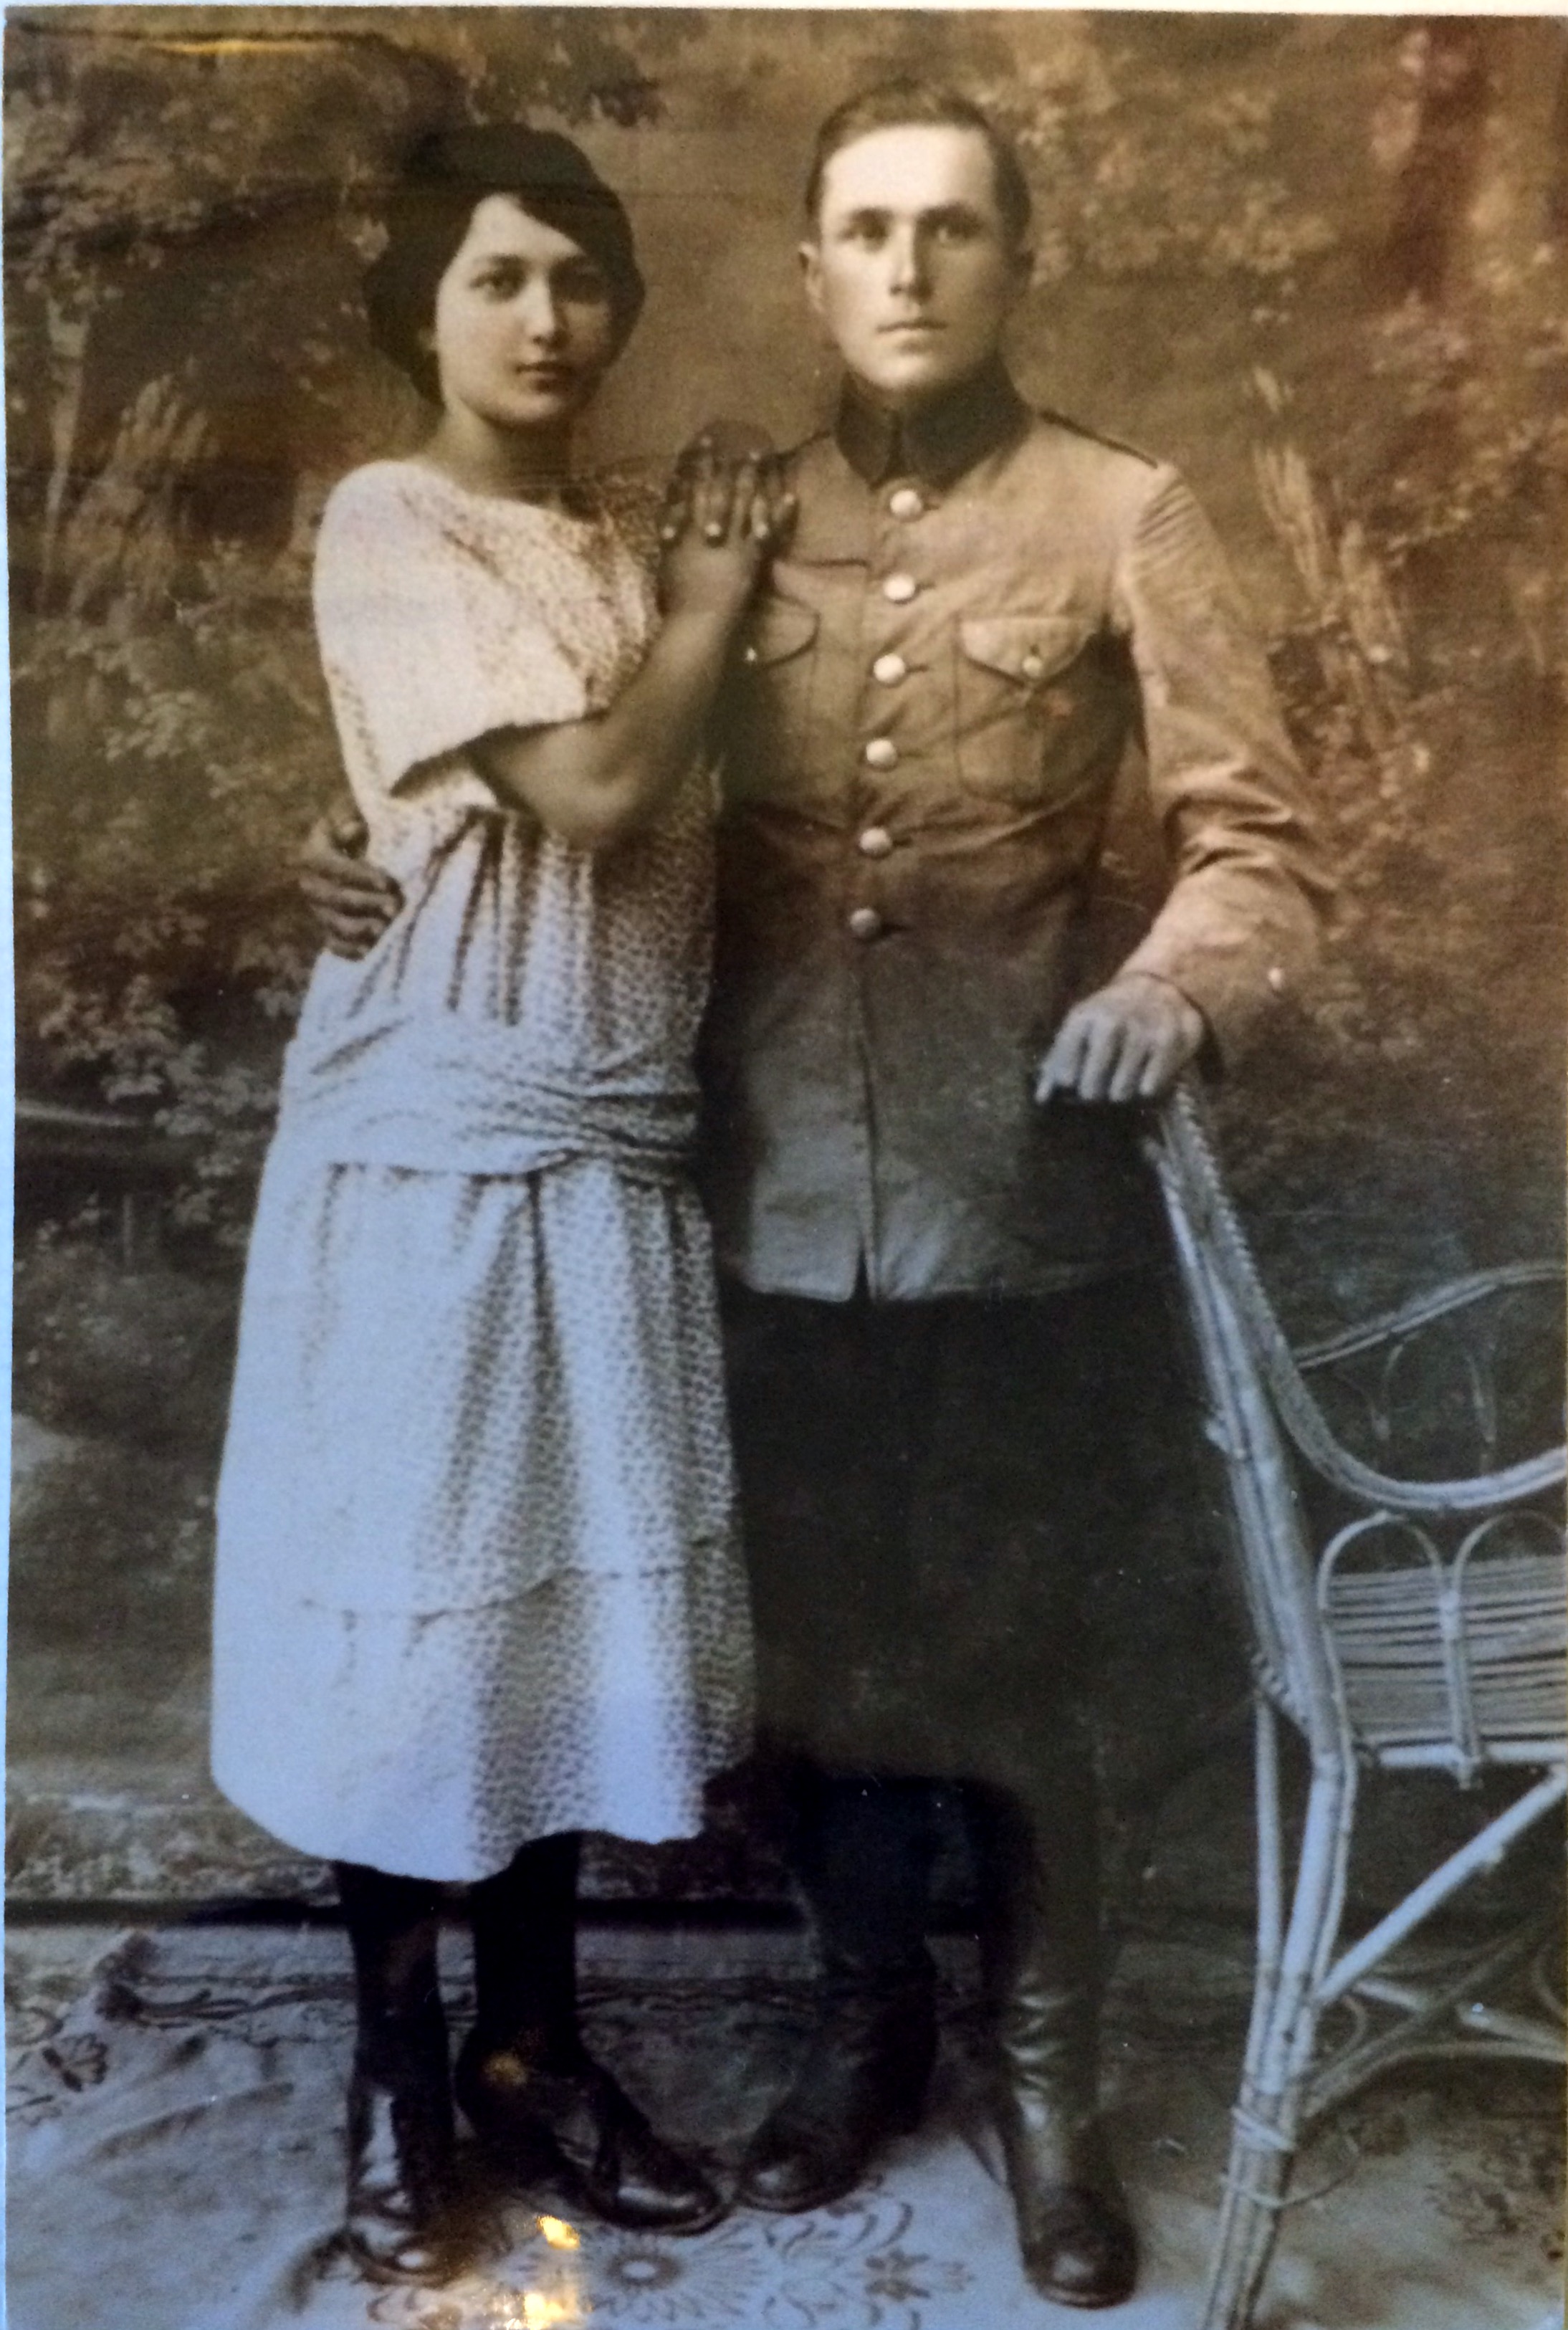 Great aunts wedding circa 1918,
Poland